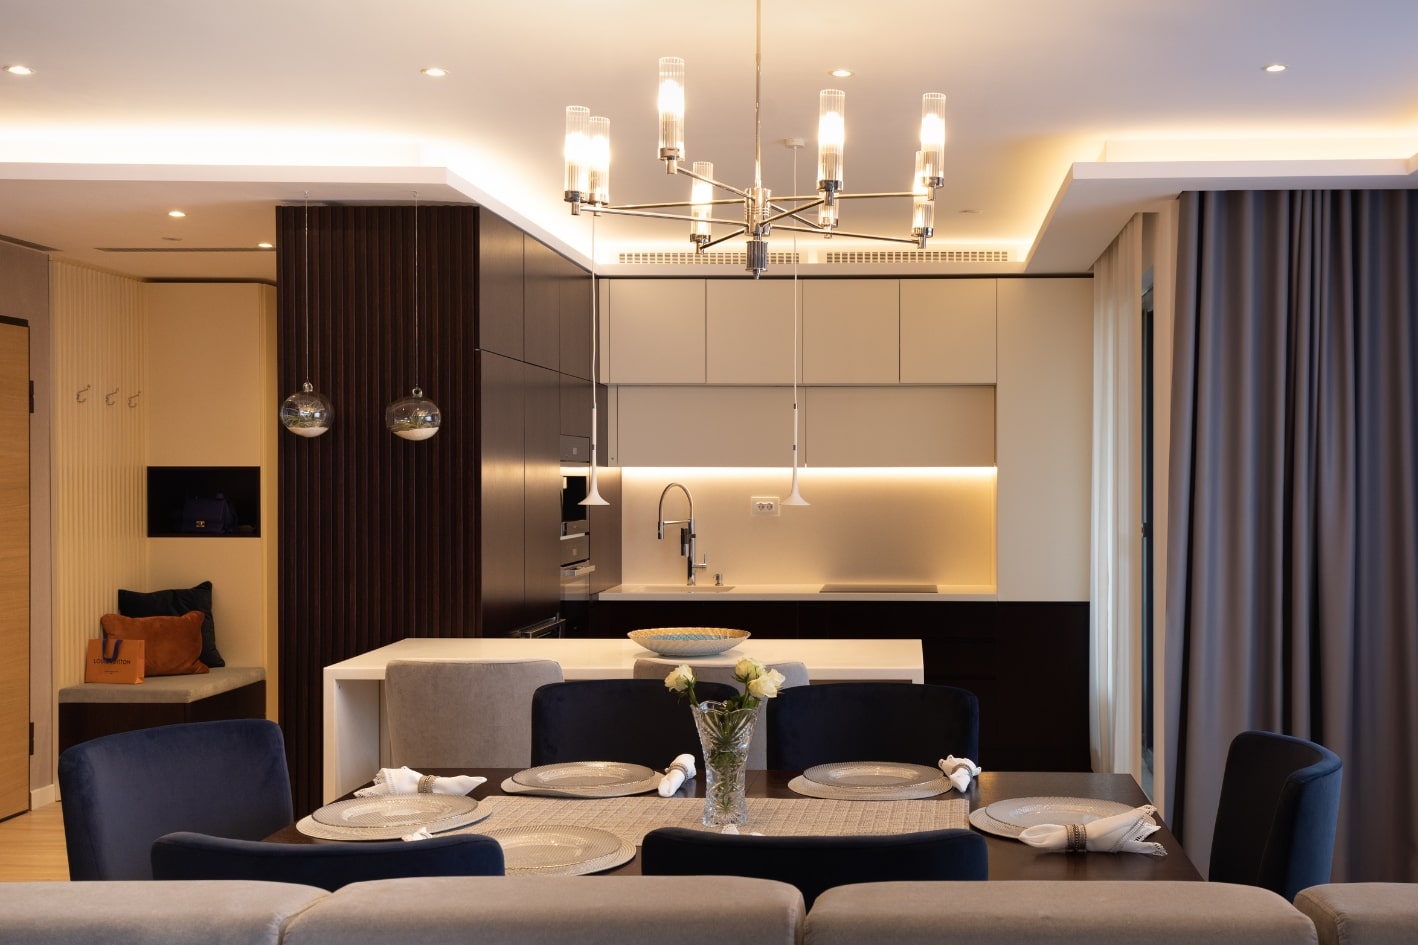 Design interior pentru o zona de dining si o bucatarie moderna.